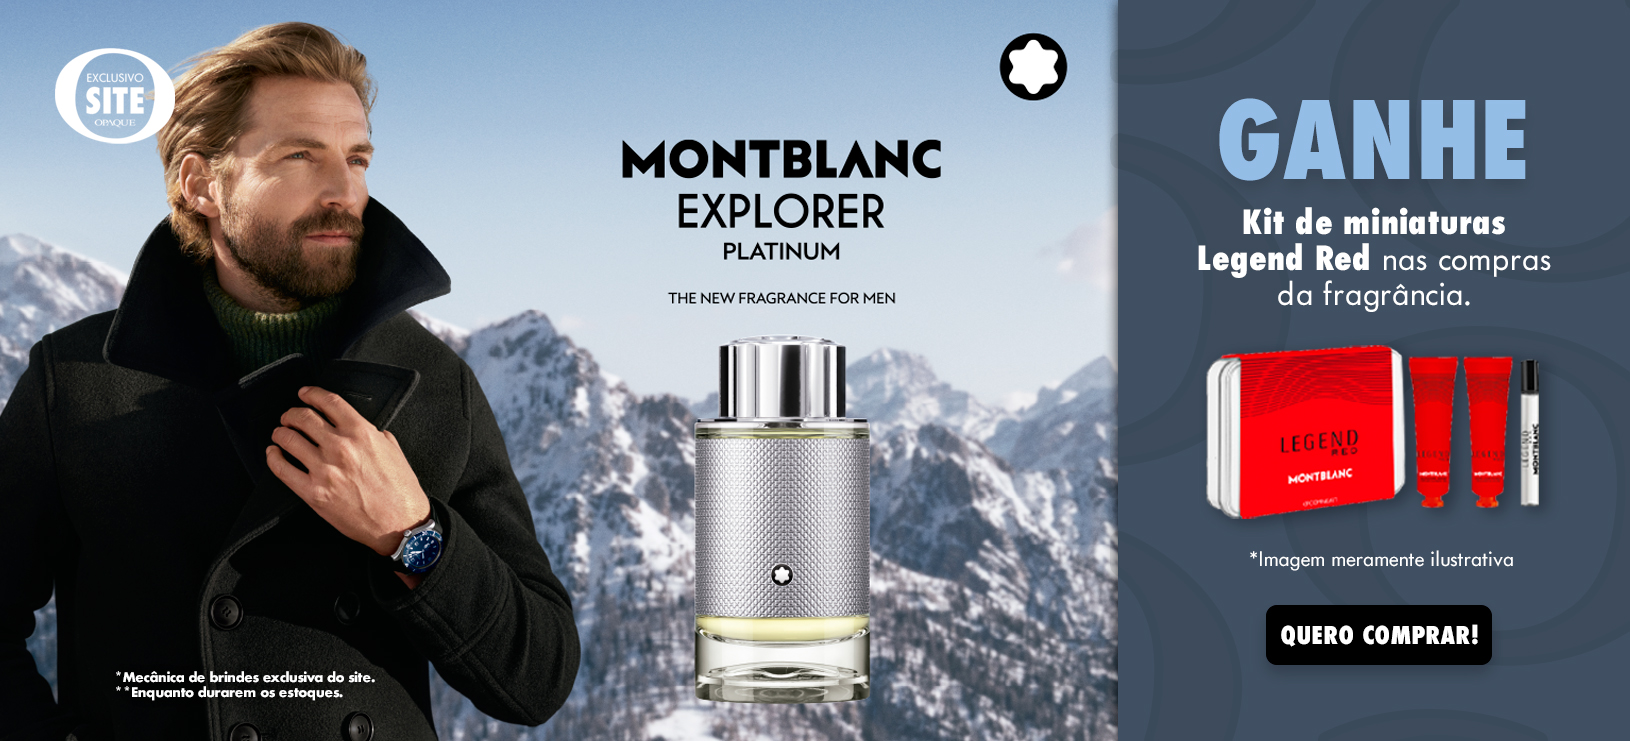 montblanc-explorer-platinum-banner-desktop